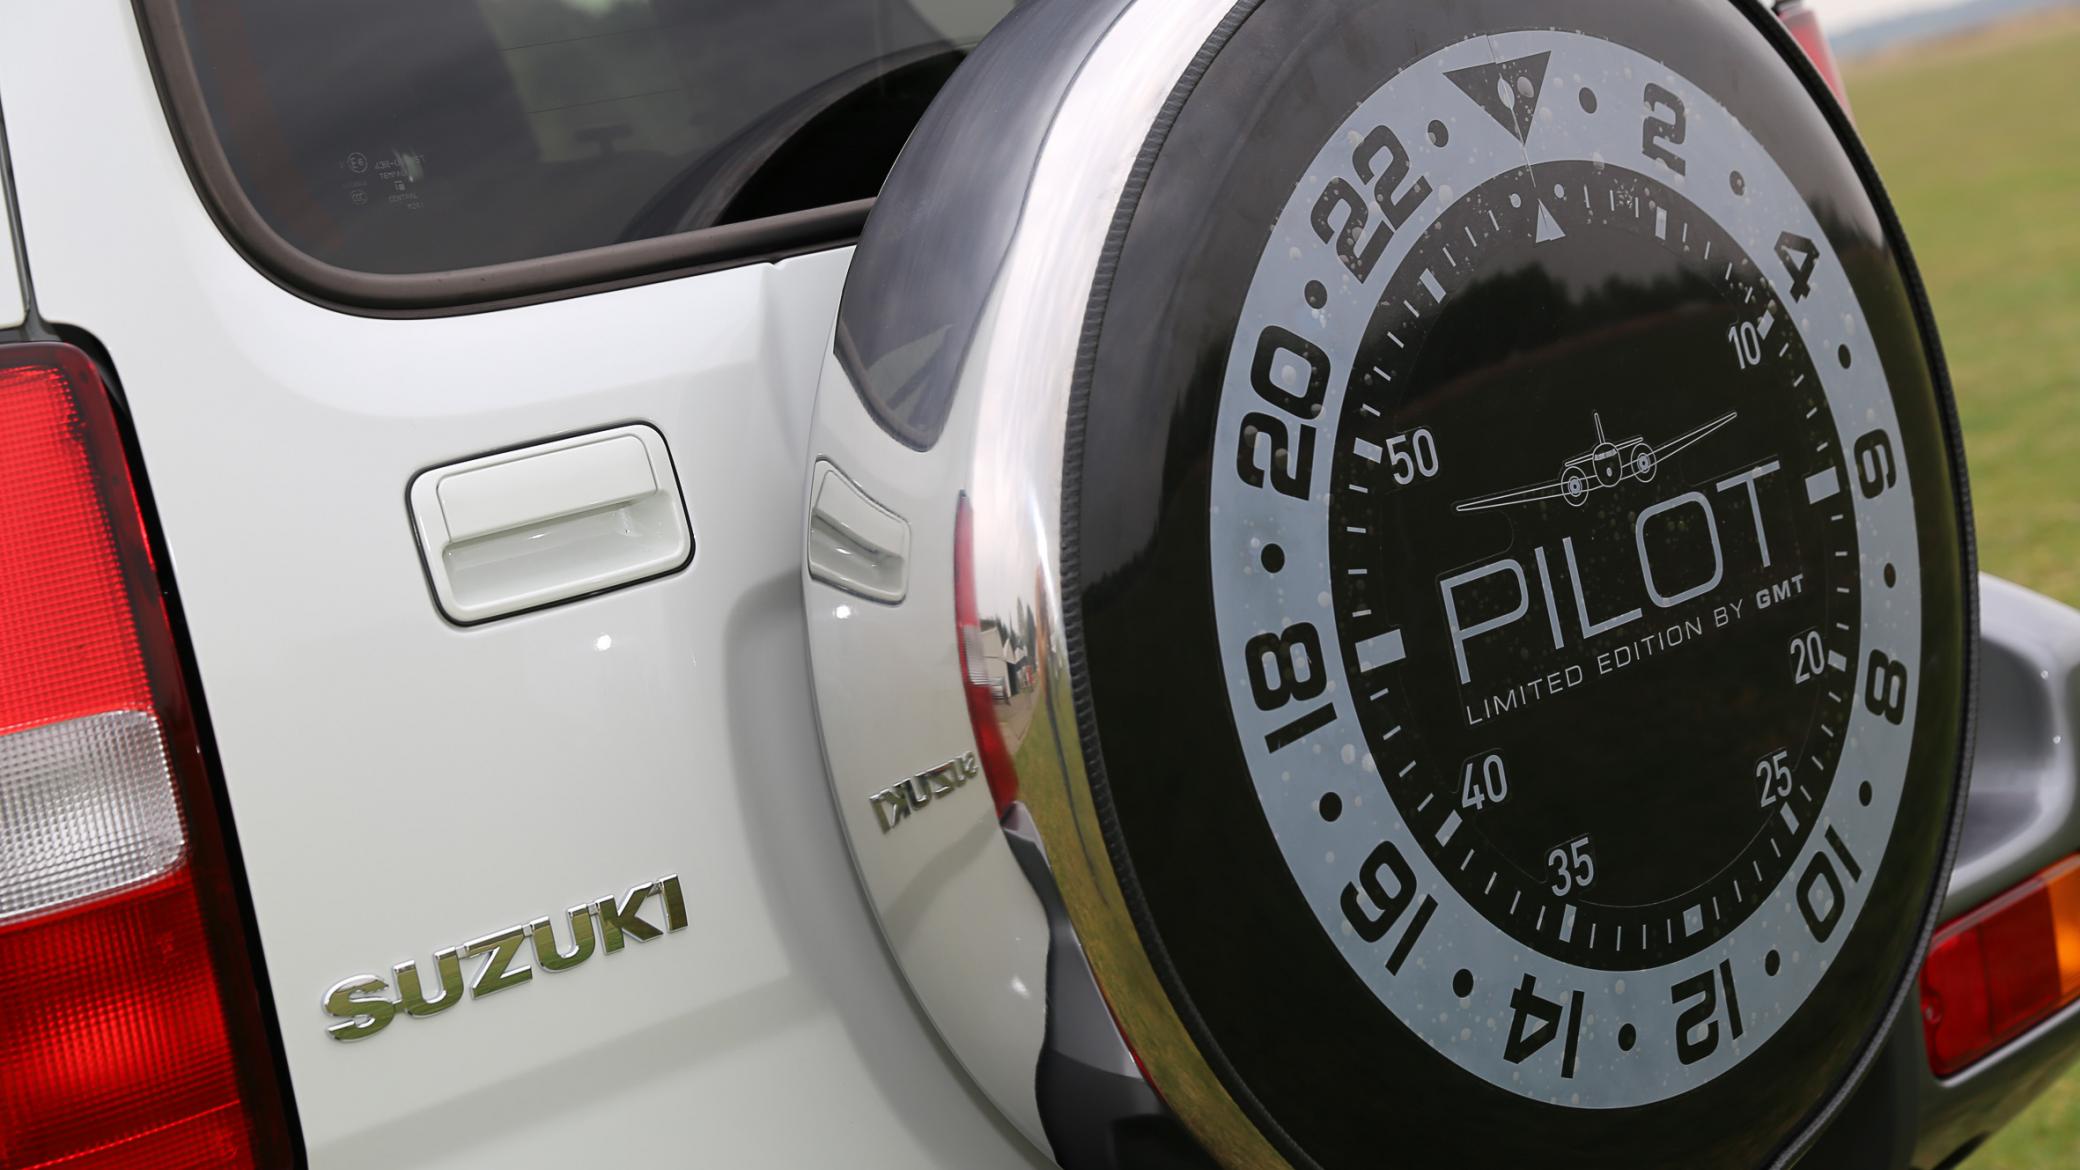 Suzuki Jimny Pilot